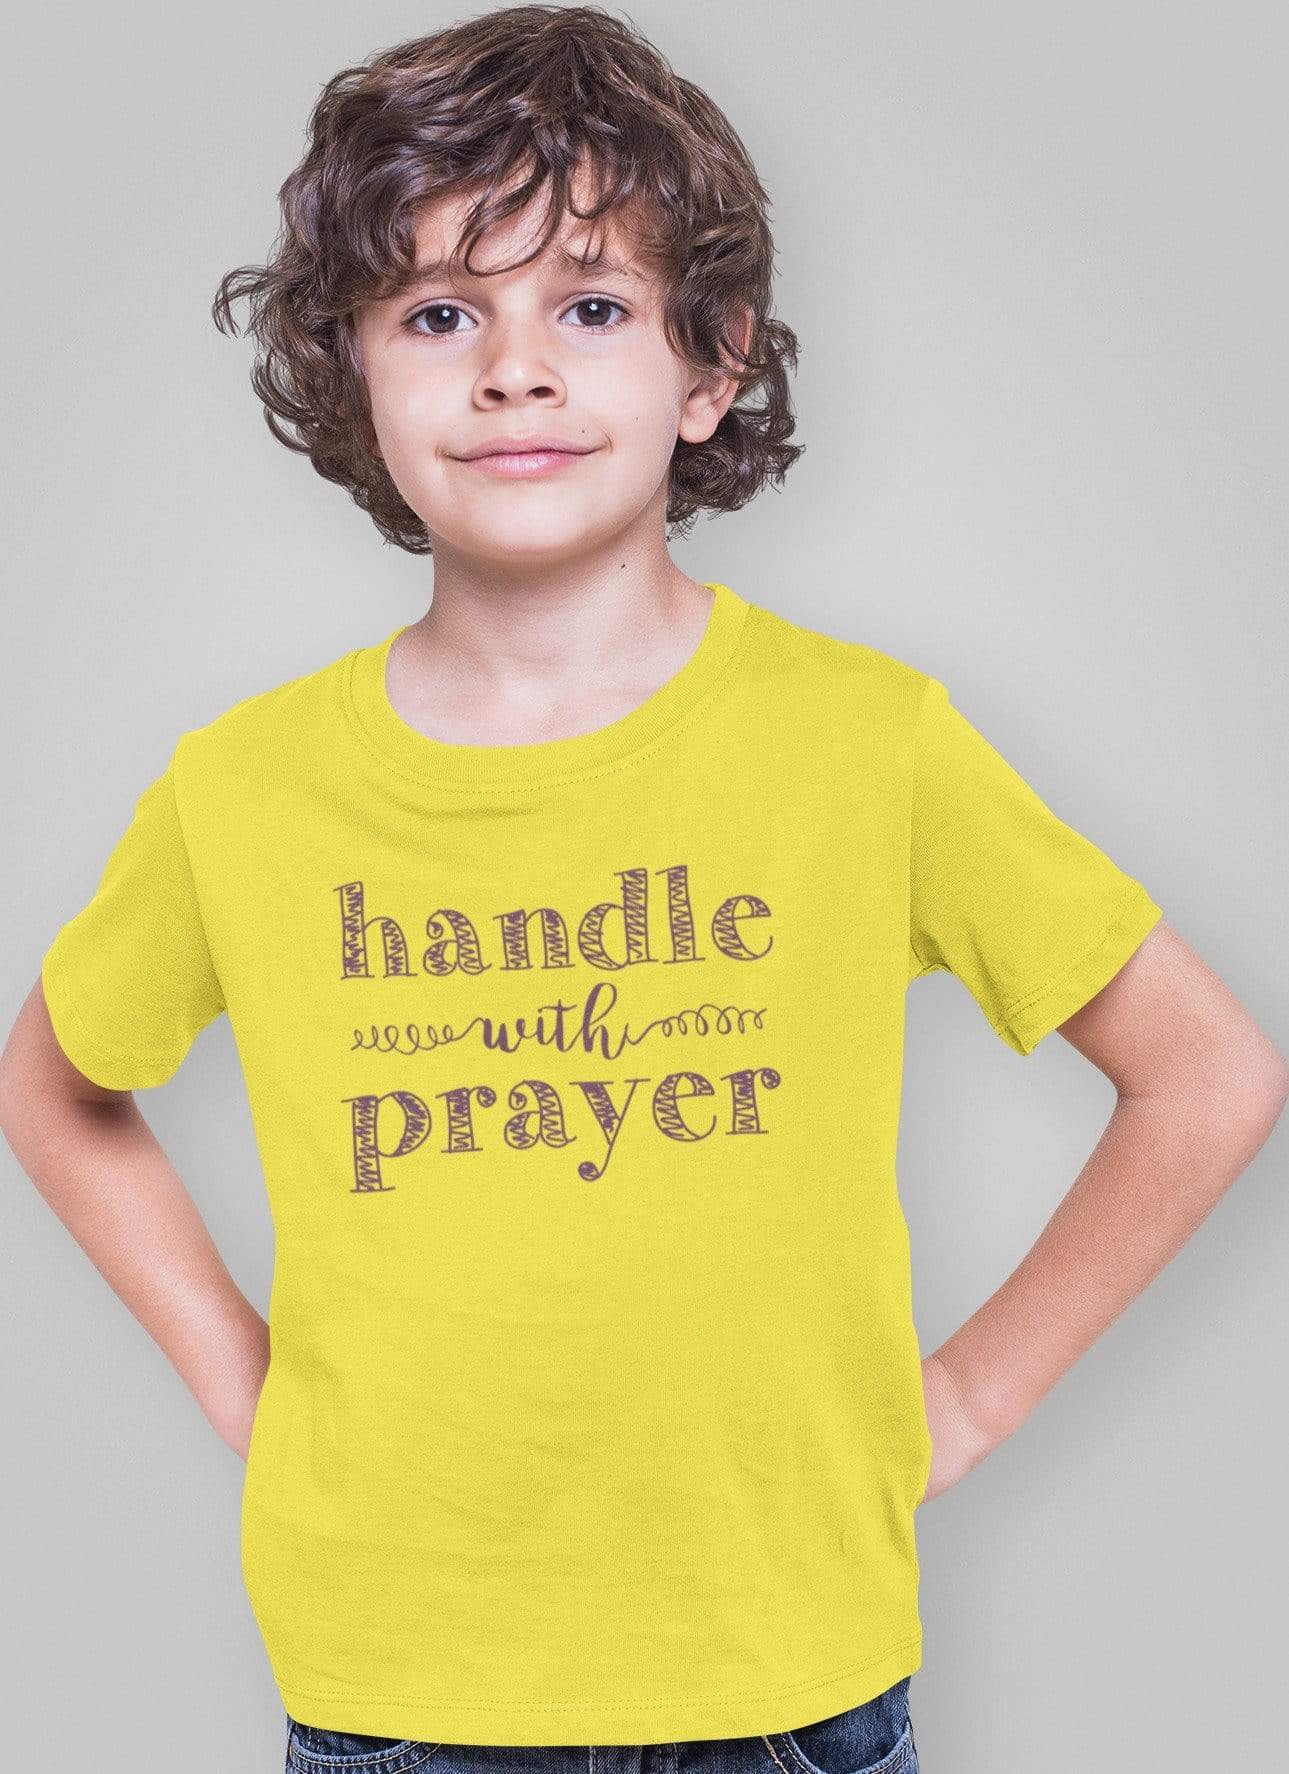 Living Words Boy Round neck Tshirt 0-11M / Yellow Handle with prayer